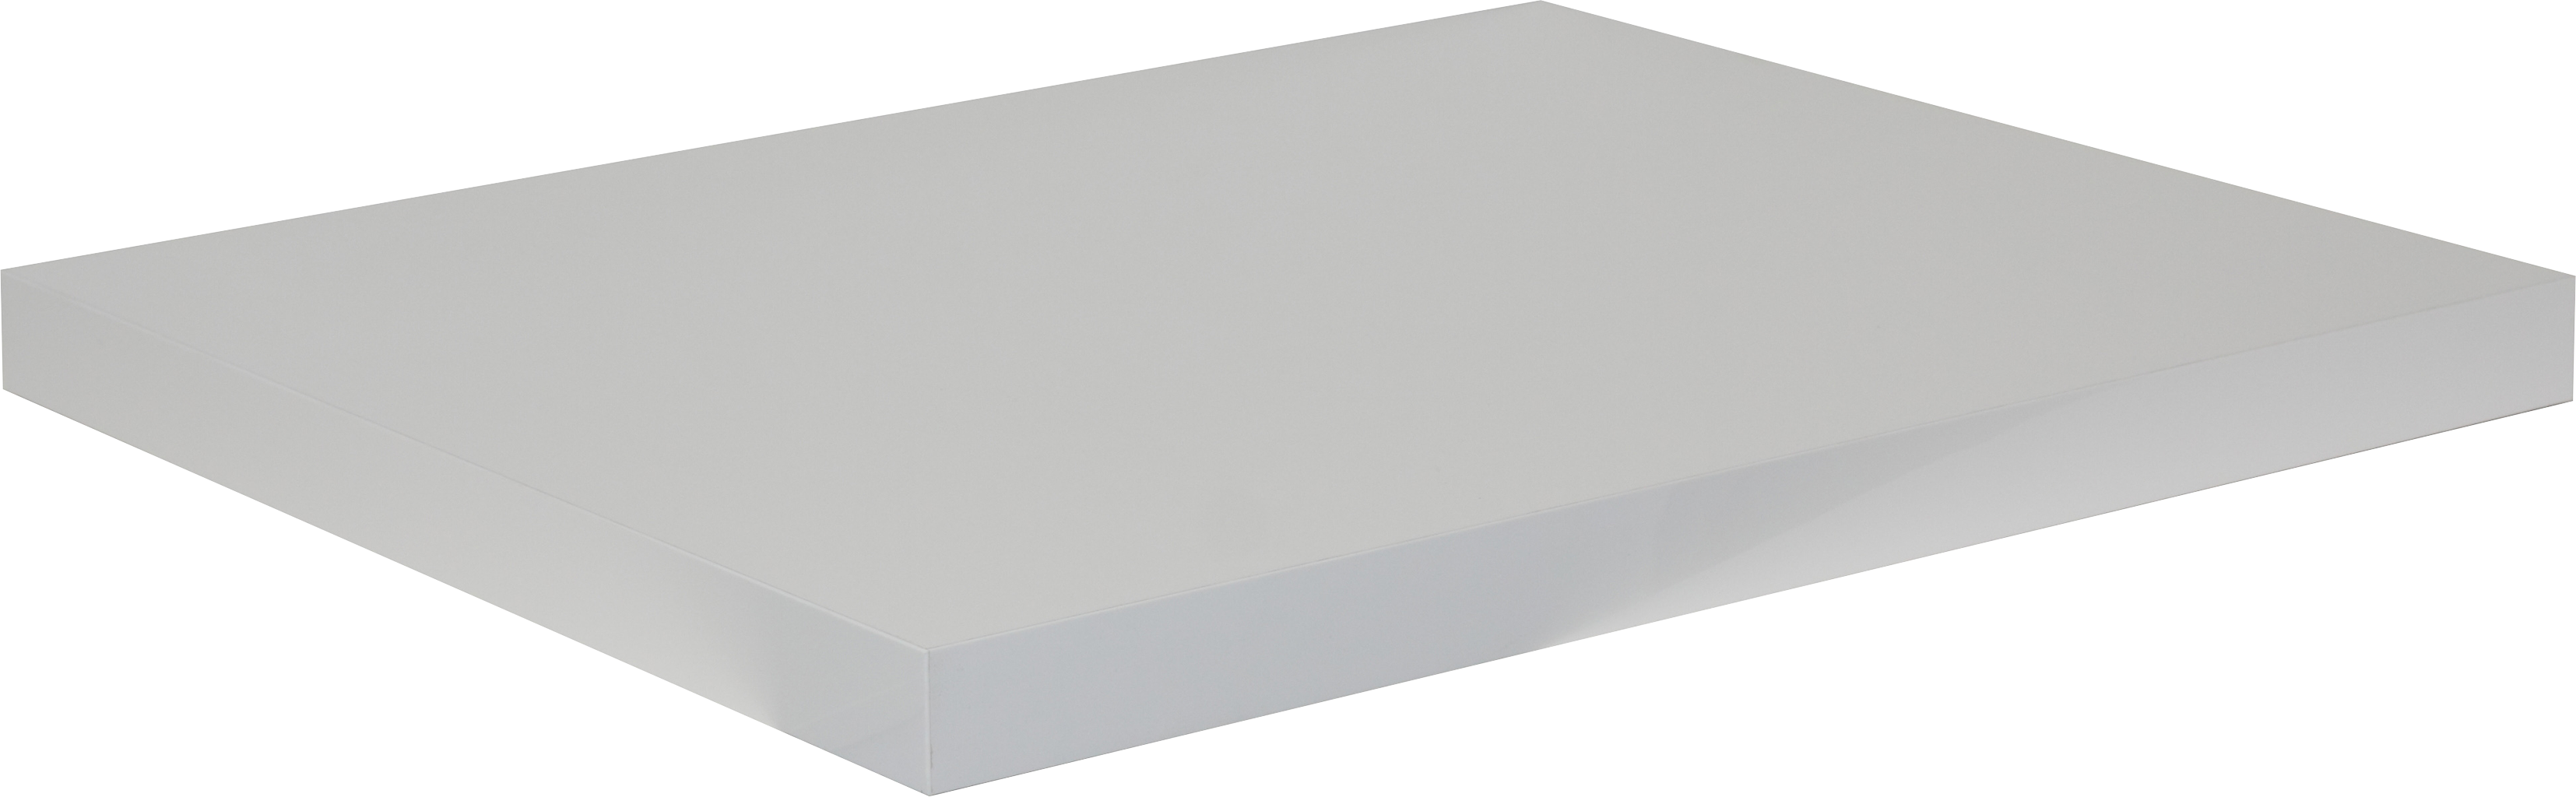 Encimera lavabo remix blanco 60x49x3.8 cm